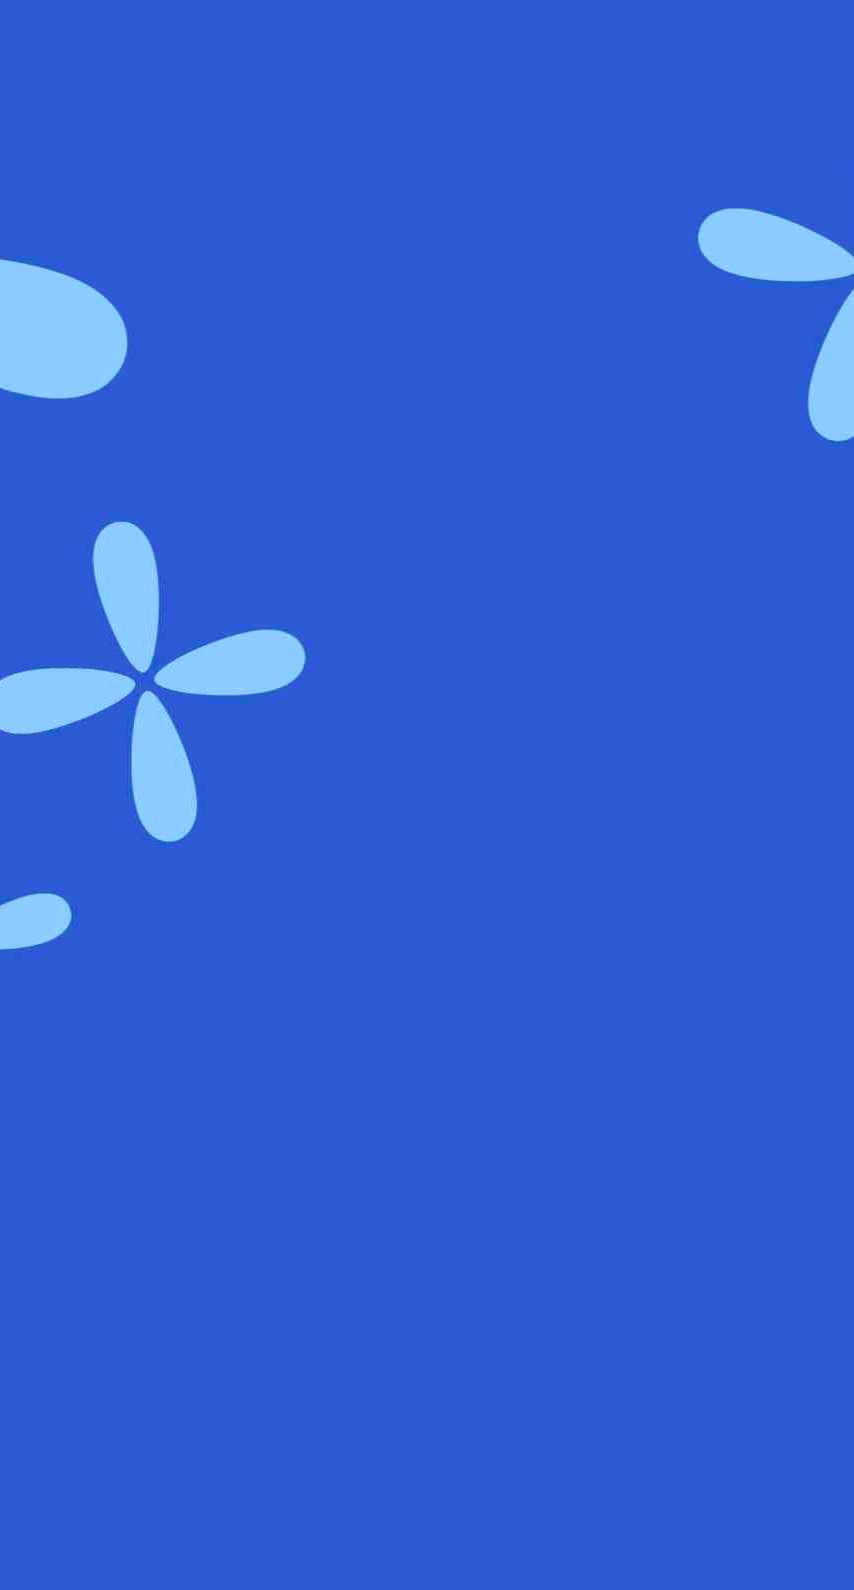 Ilustrasi bunga biru | wallpaper.sc iPhone6s